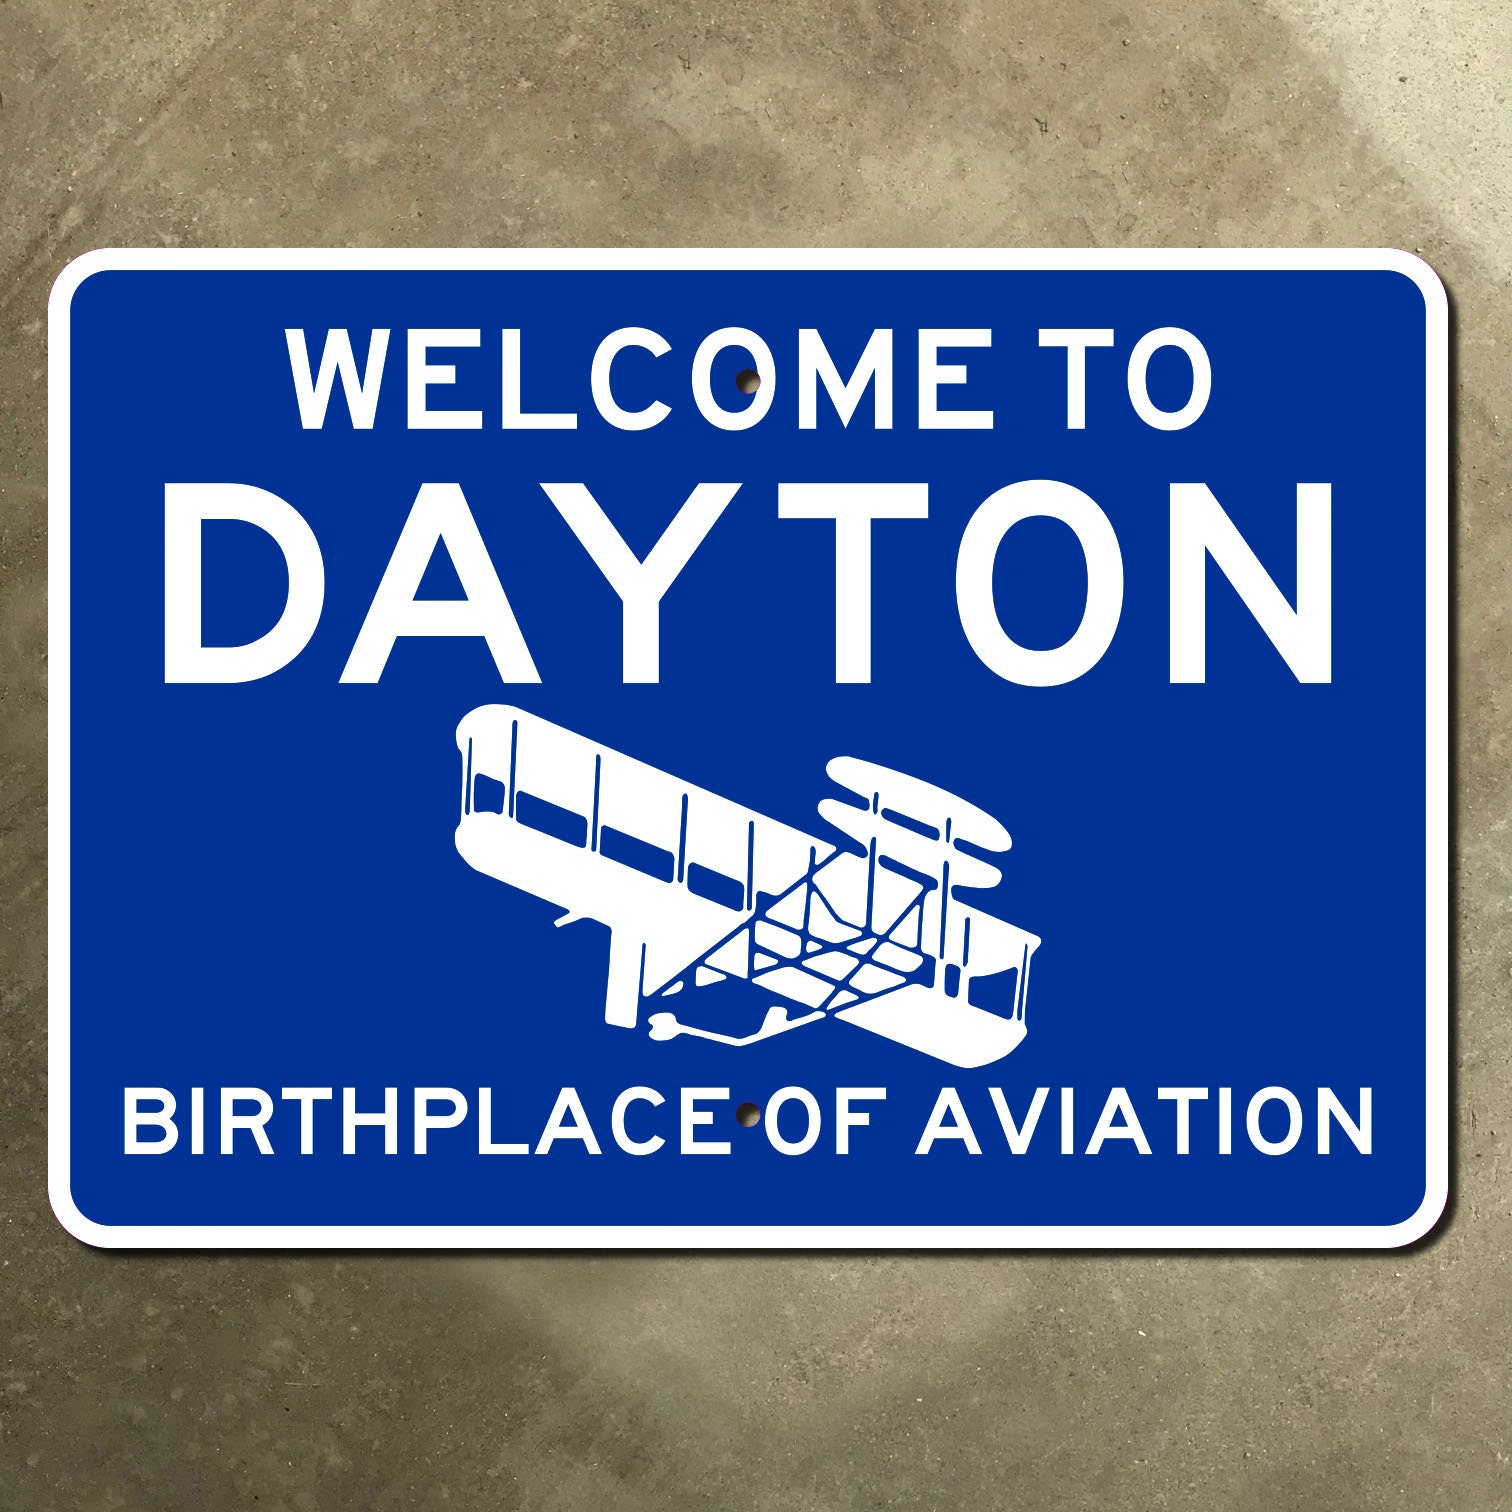 Ohio Dayton Birthplace of Aviation City Limits Highway Marker pic